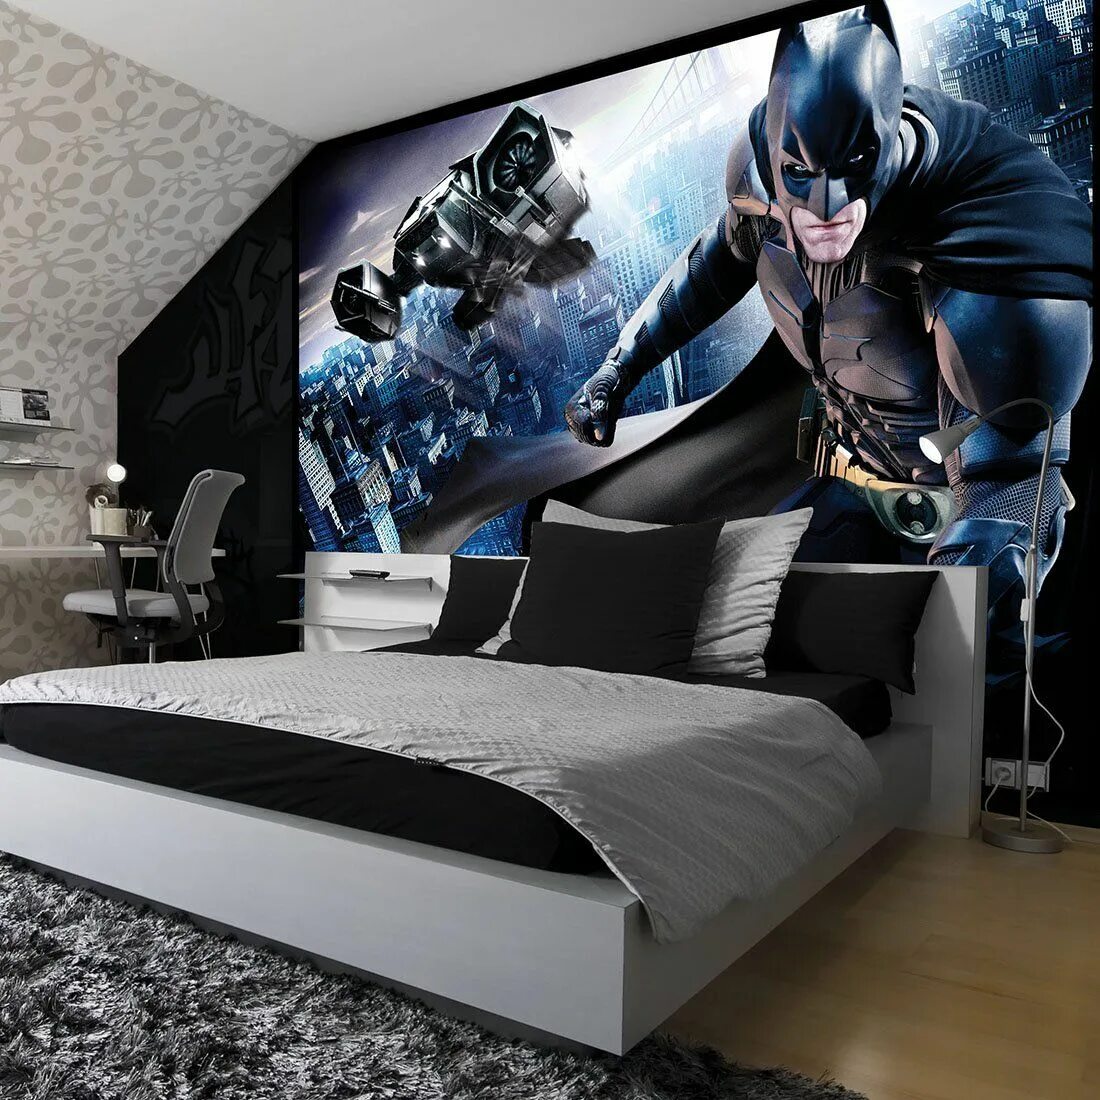 Крутой стен. Комната в стиле Бэтмена. Спальня в стиле Бэтмена. Фотообои для подростка мальчика. Комната мальчику в стиле Бэтмен.